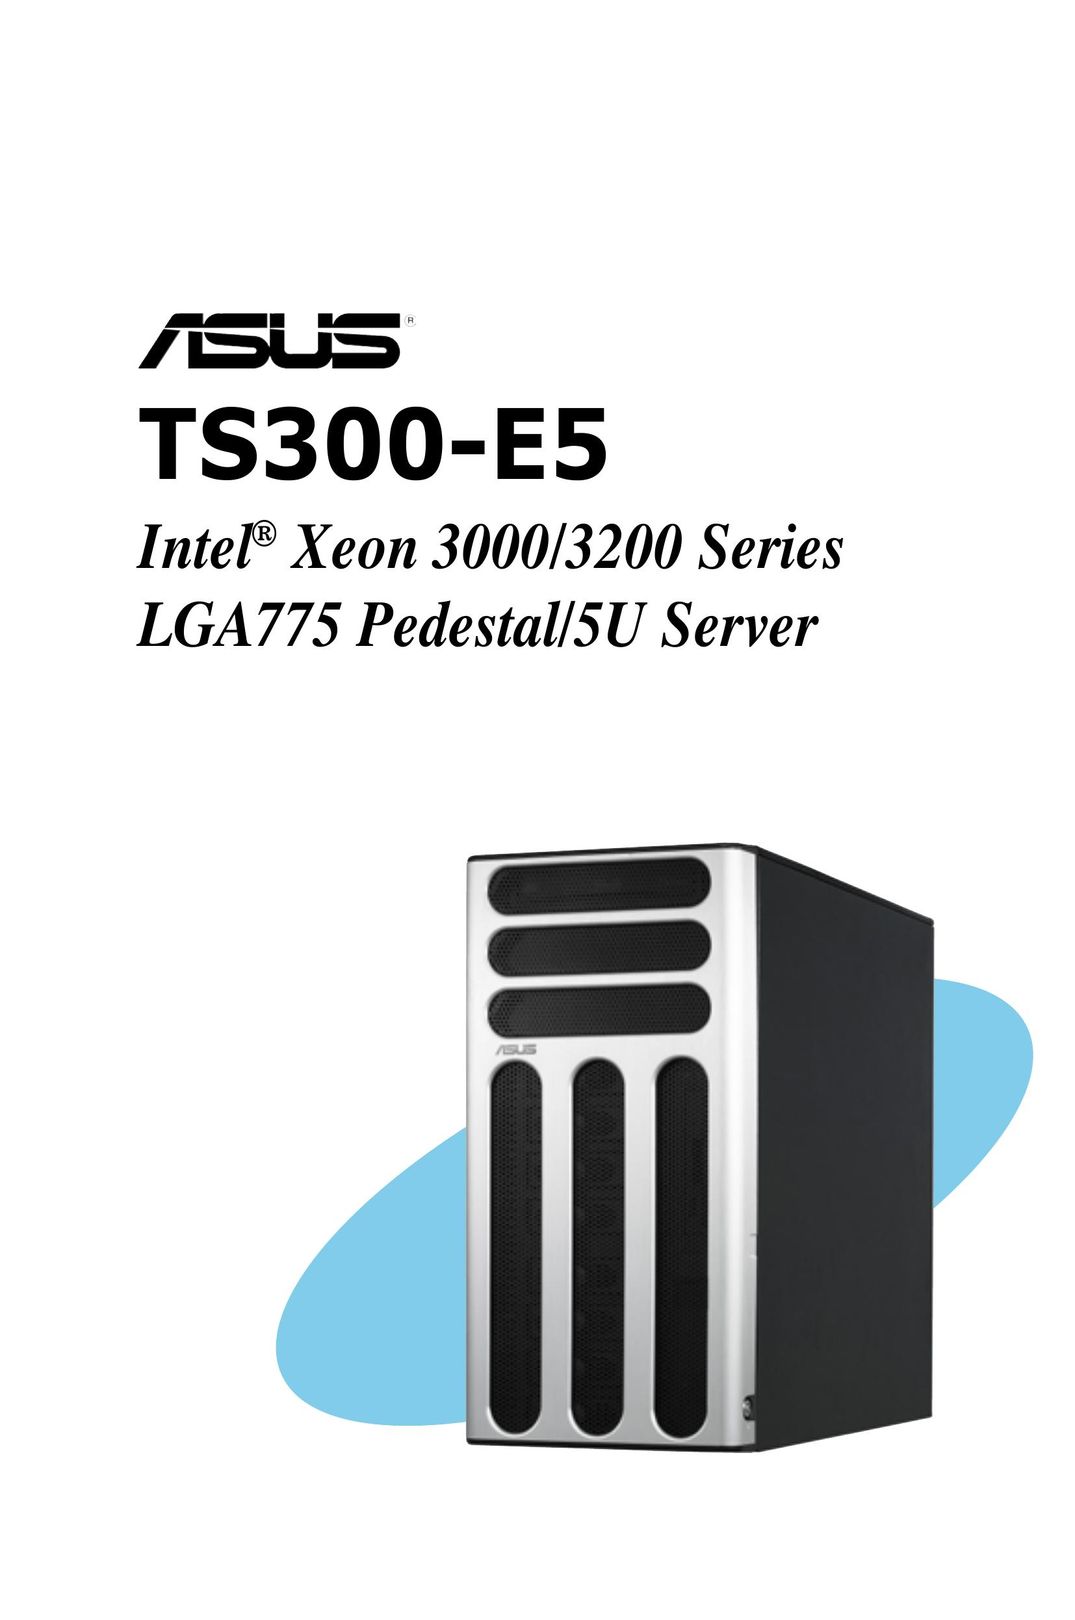 Asus TS300-E5 Server User Manual